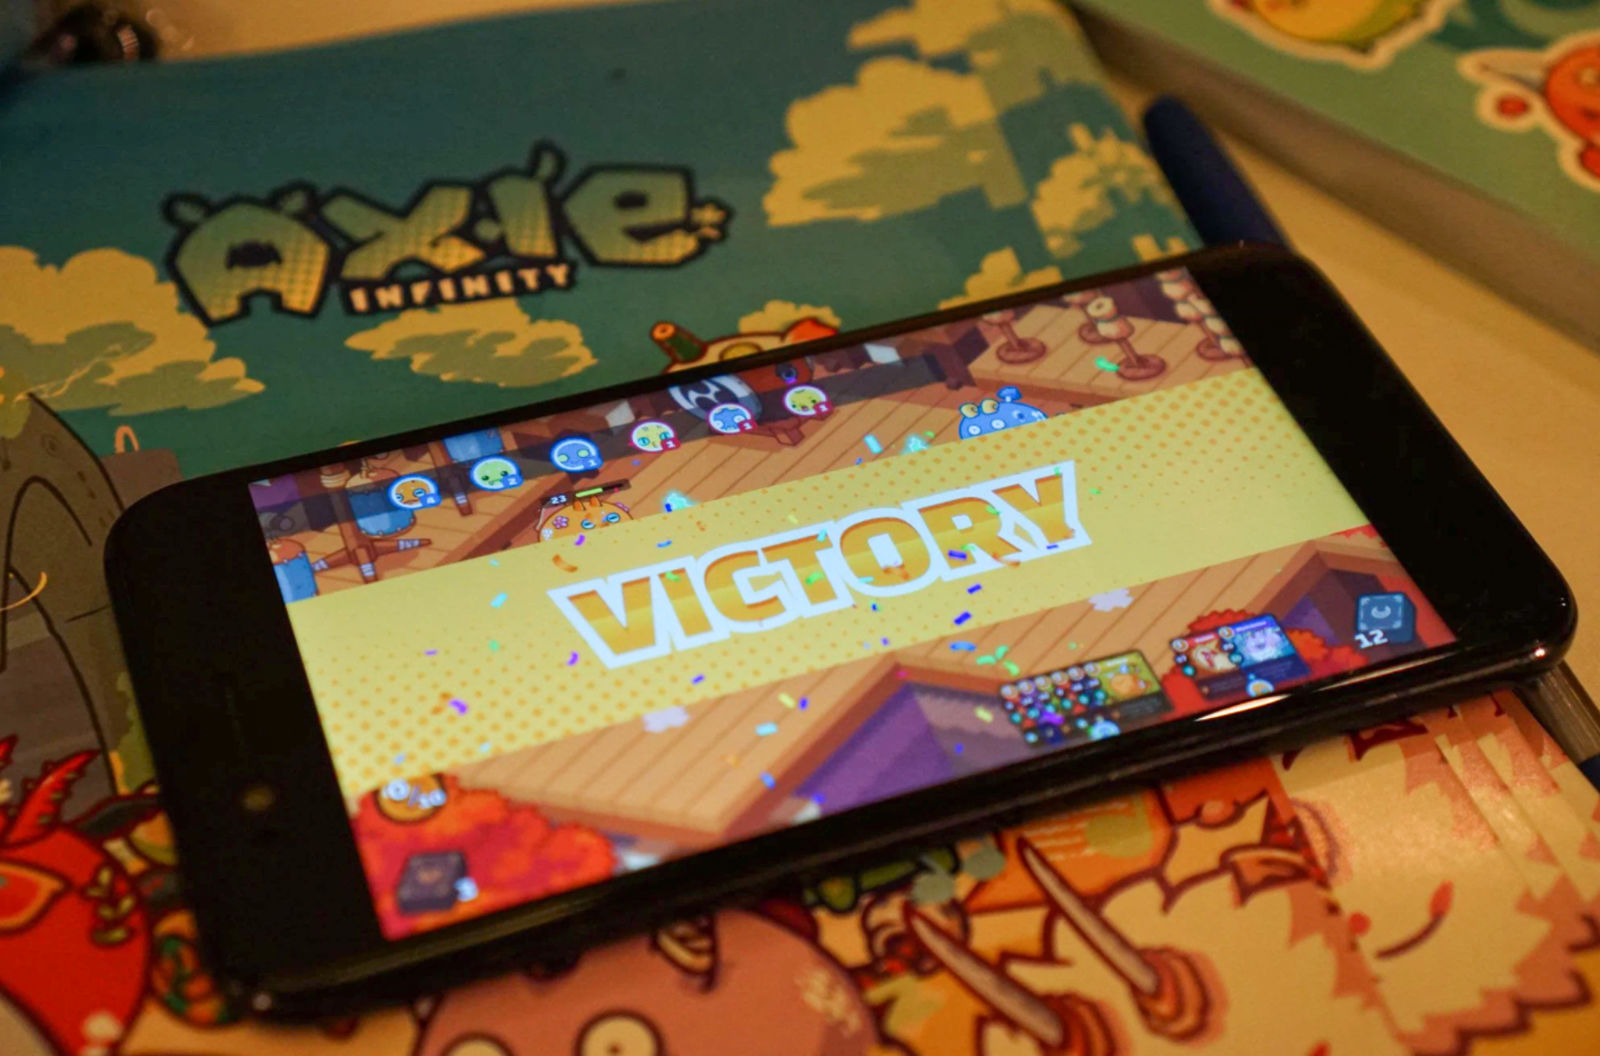 Vietnamese Developer of 'Axie Infinity' Game App Raises $7.5m in